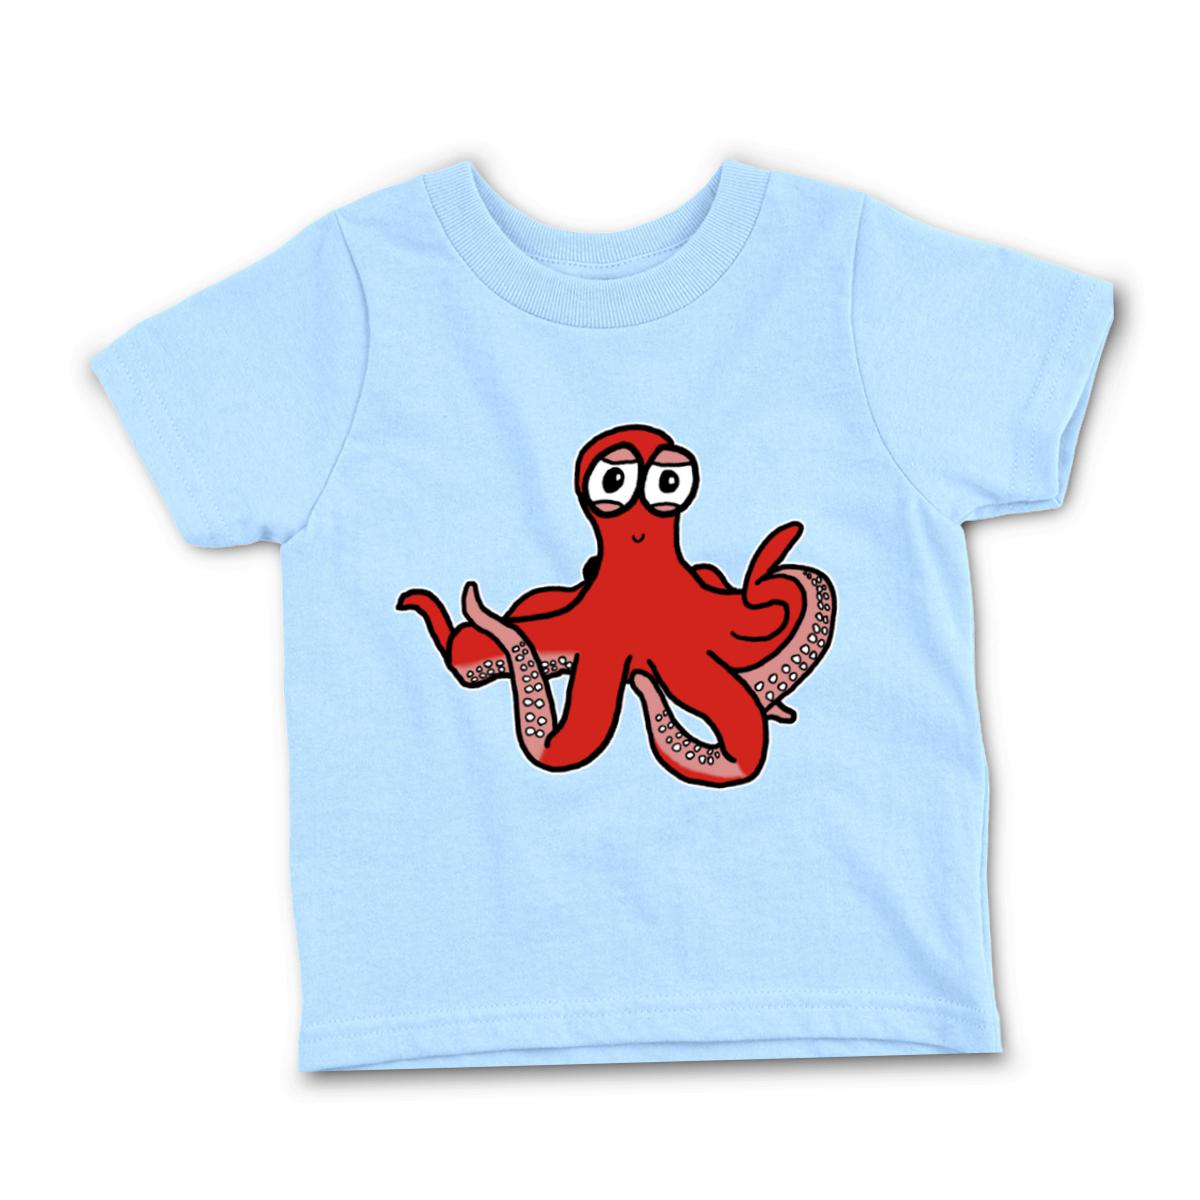 Octopus Infant Tee 24M light-blue